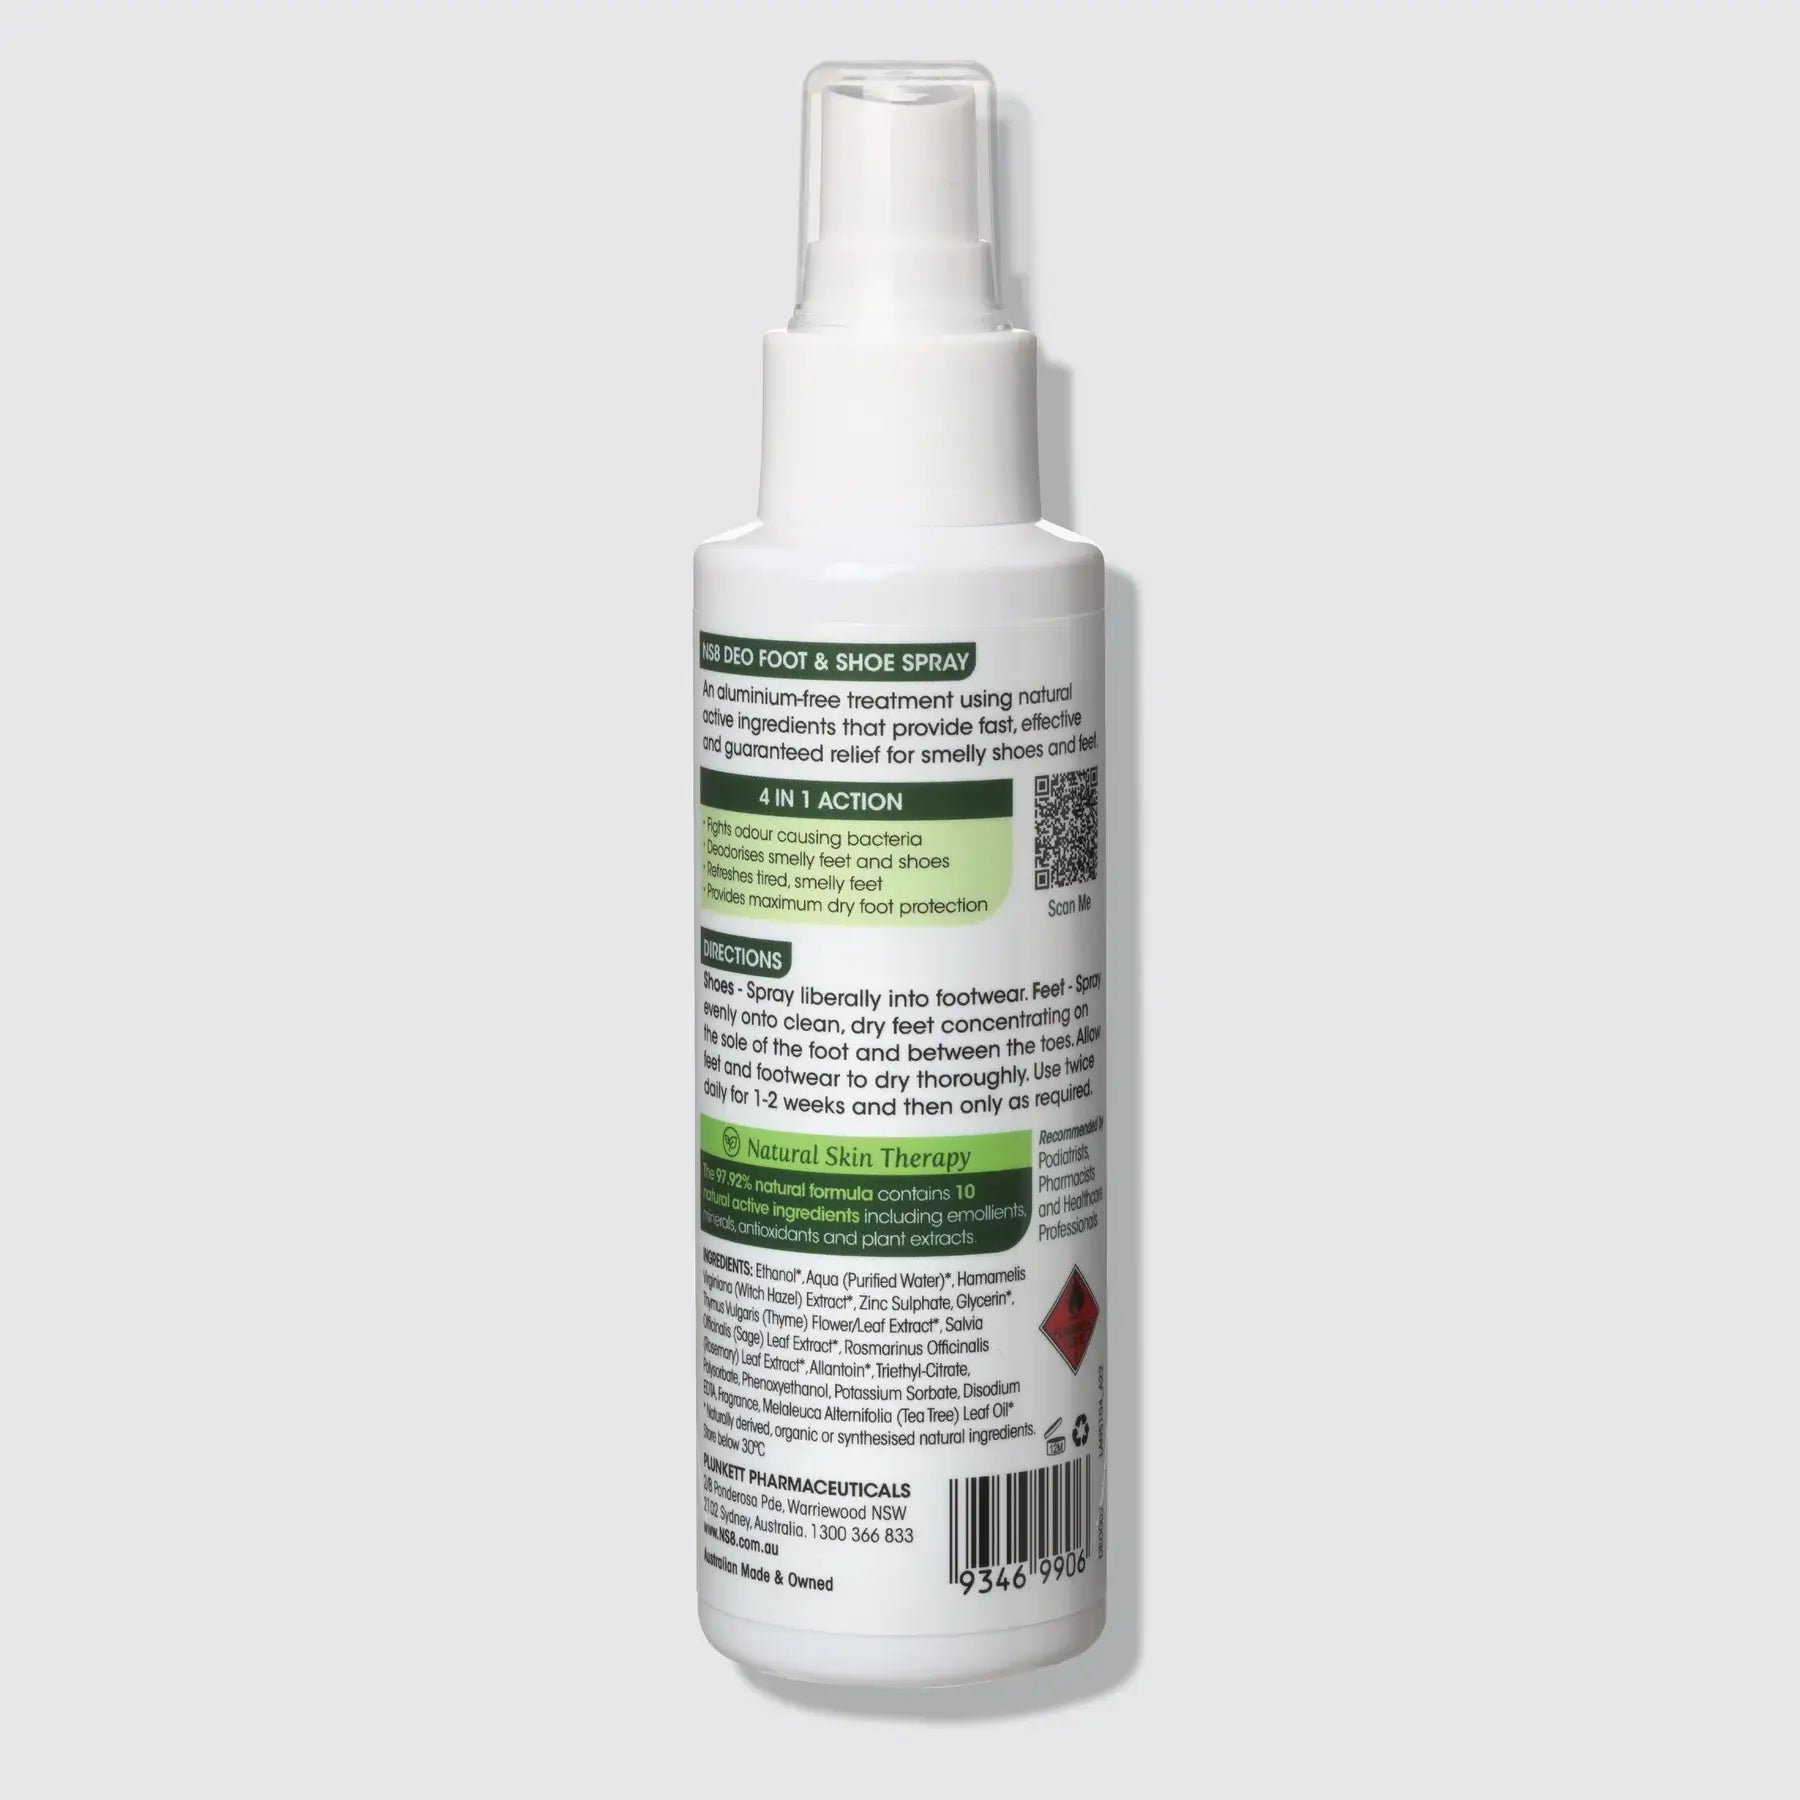 NS-8, Deodoriser, Foot and Shoe Skin Care Products Plunkett Deodoriser 